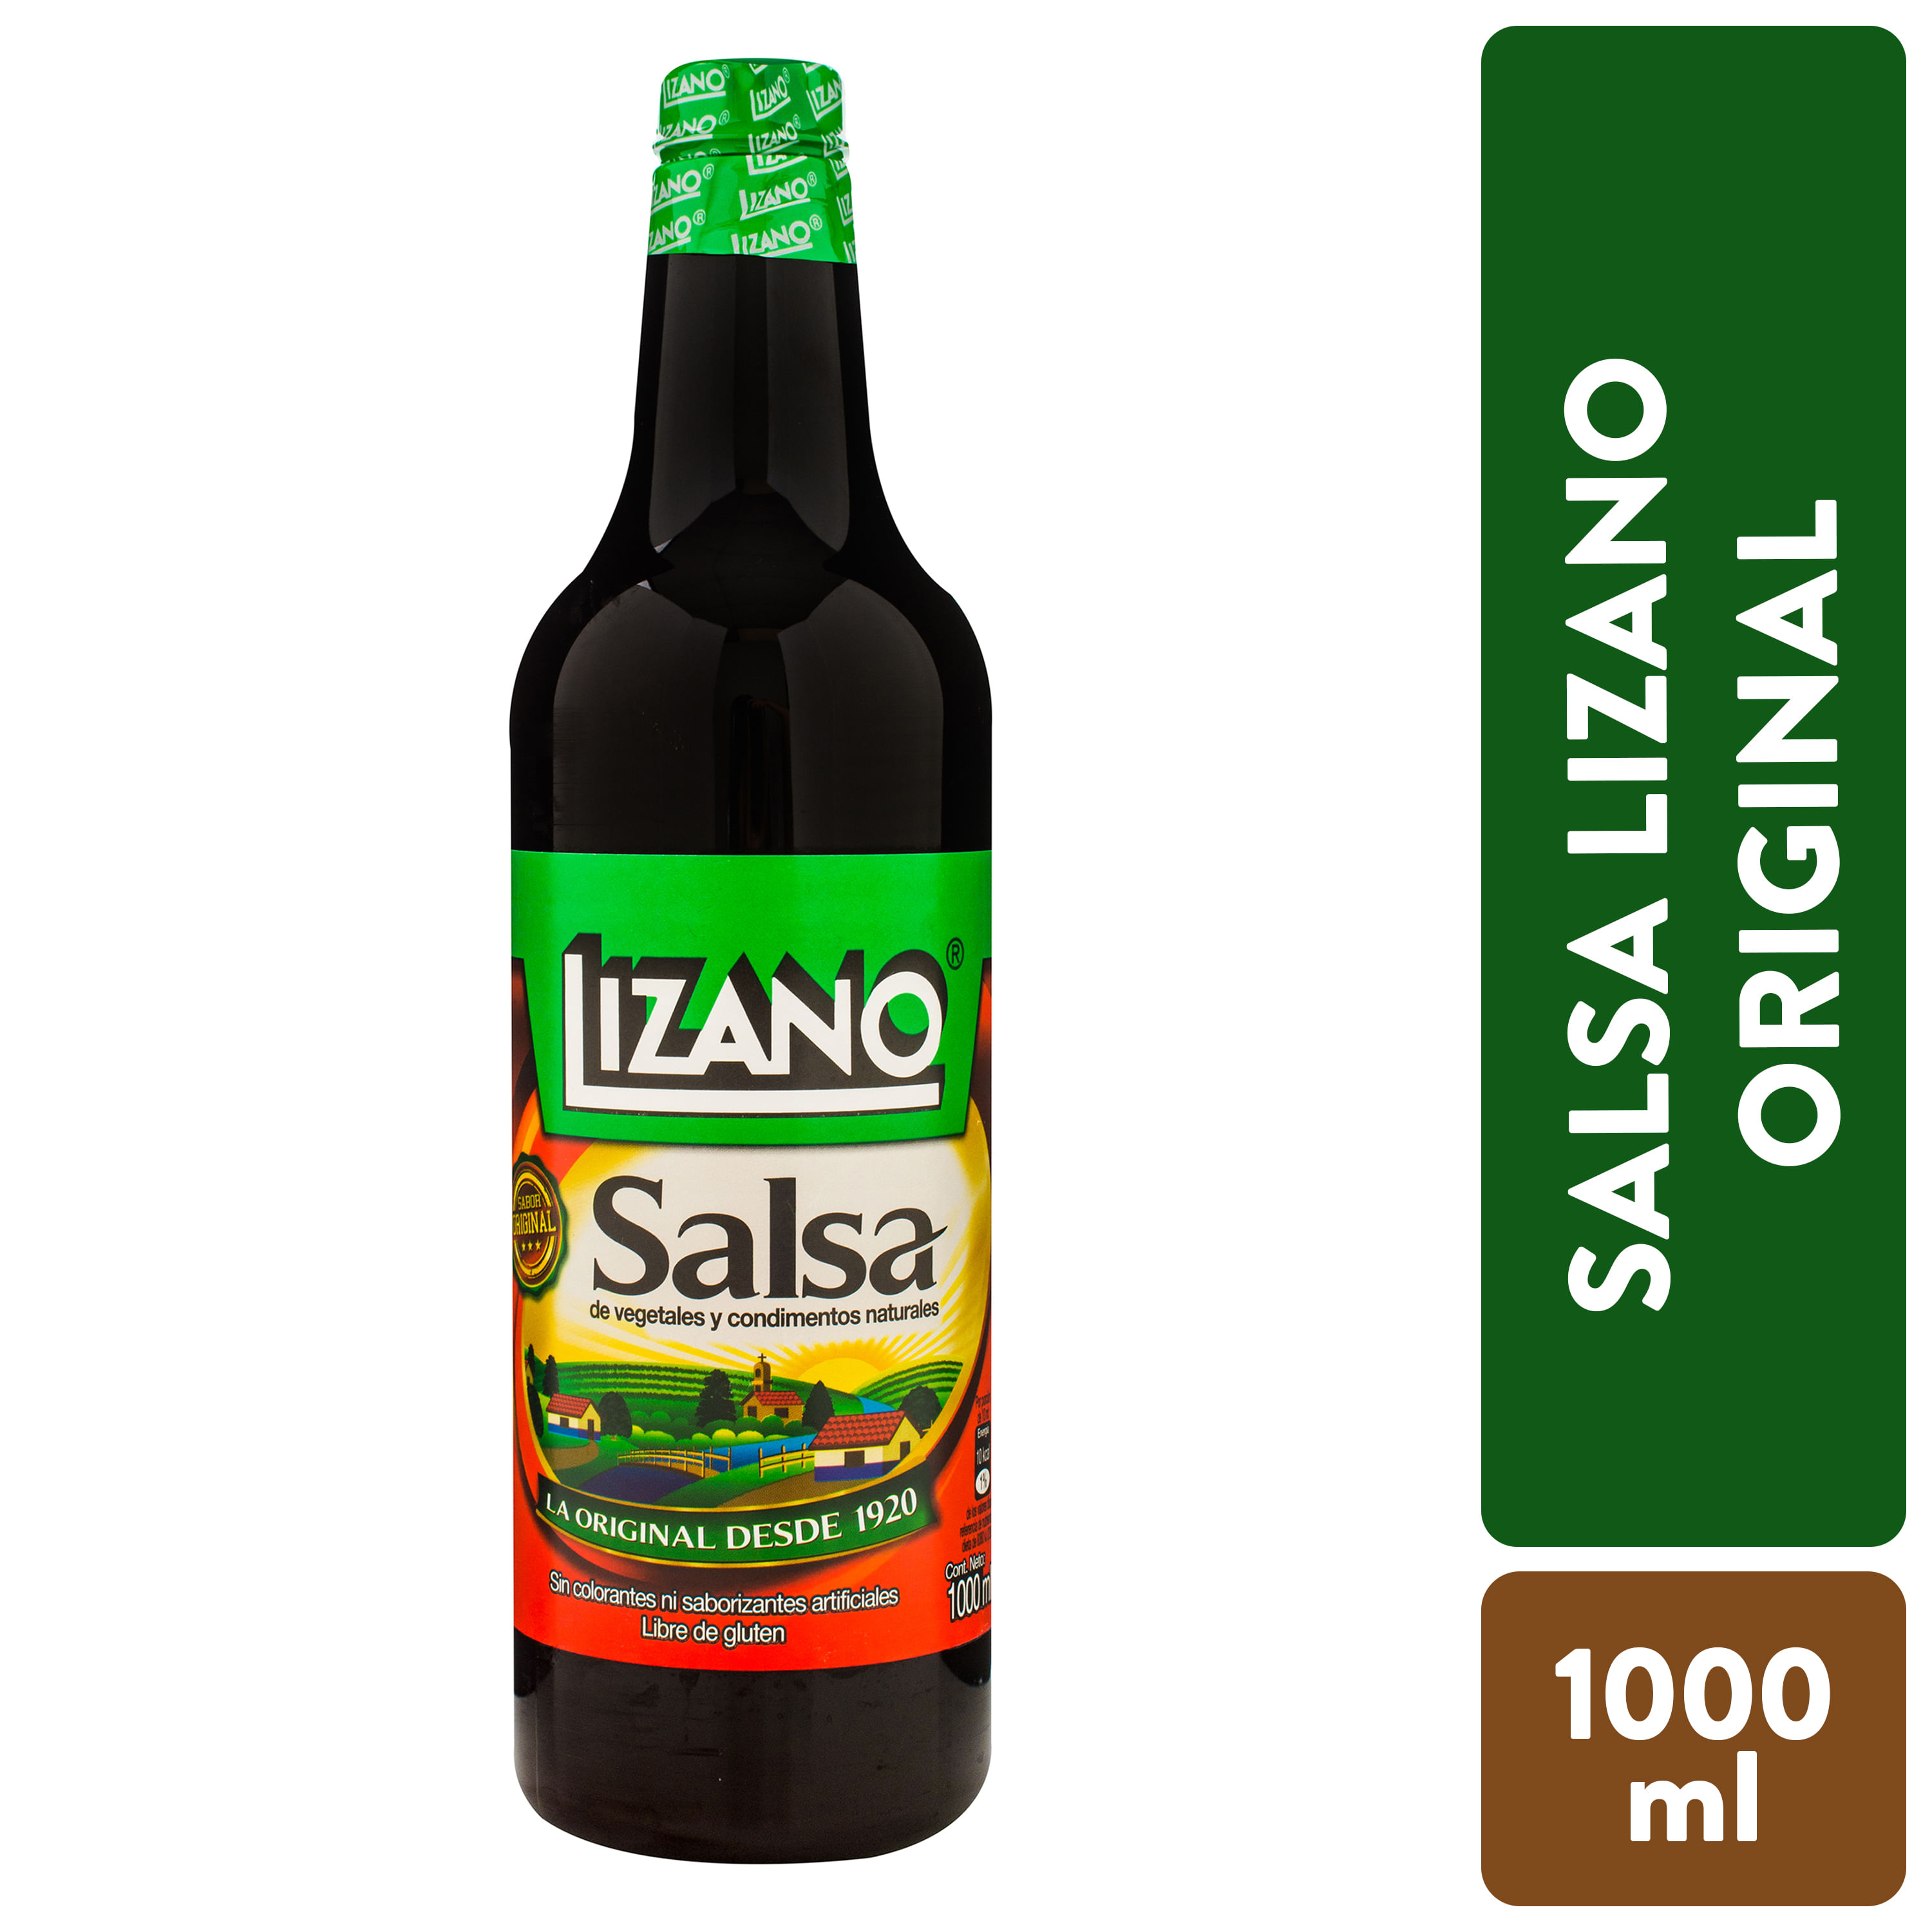 Salsa-Lizano-1000ml-1-33183